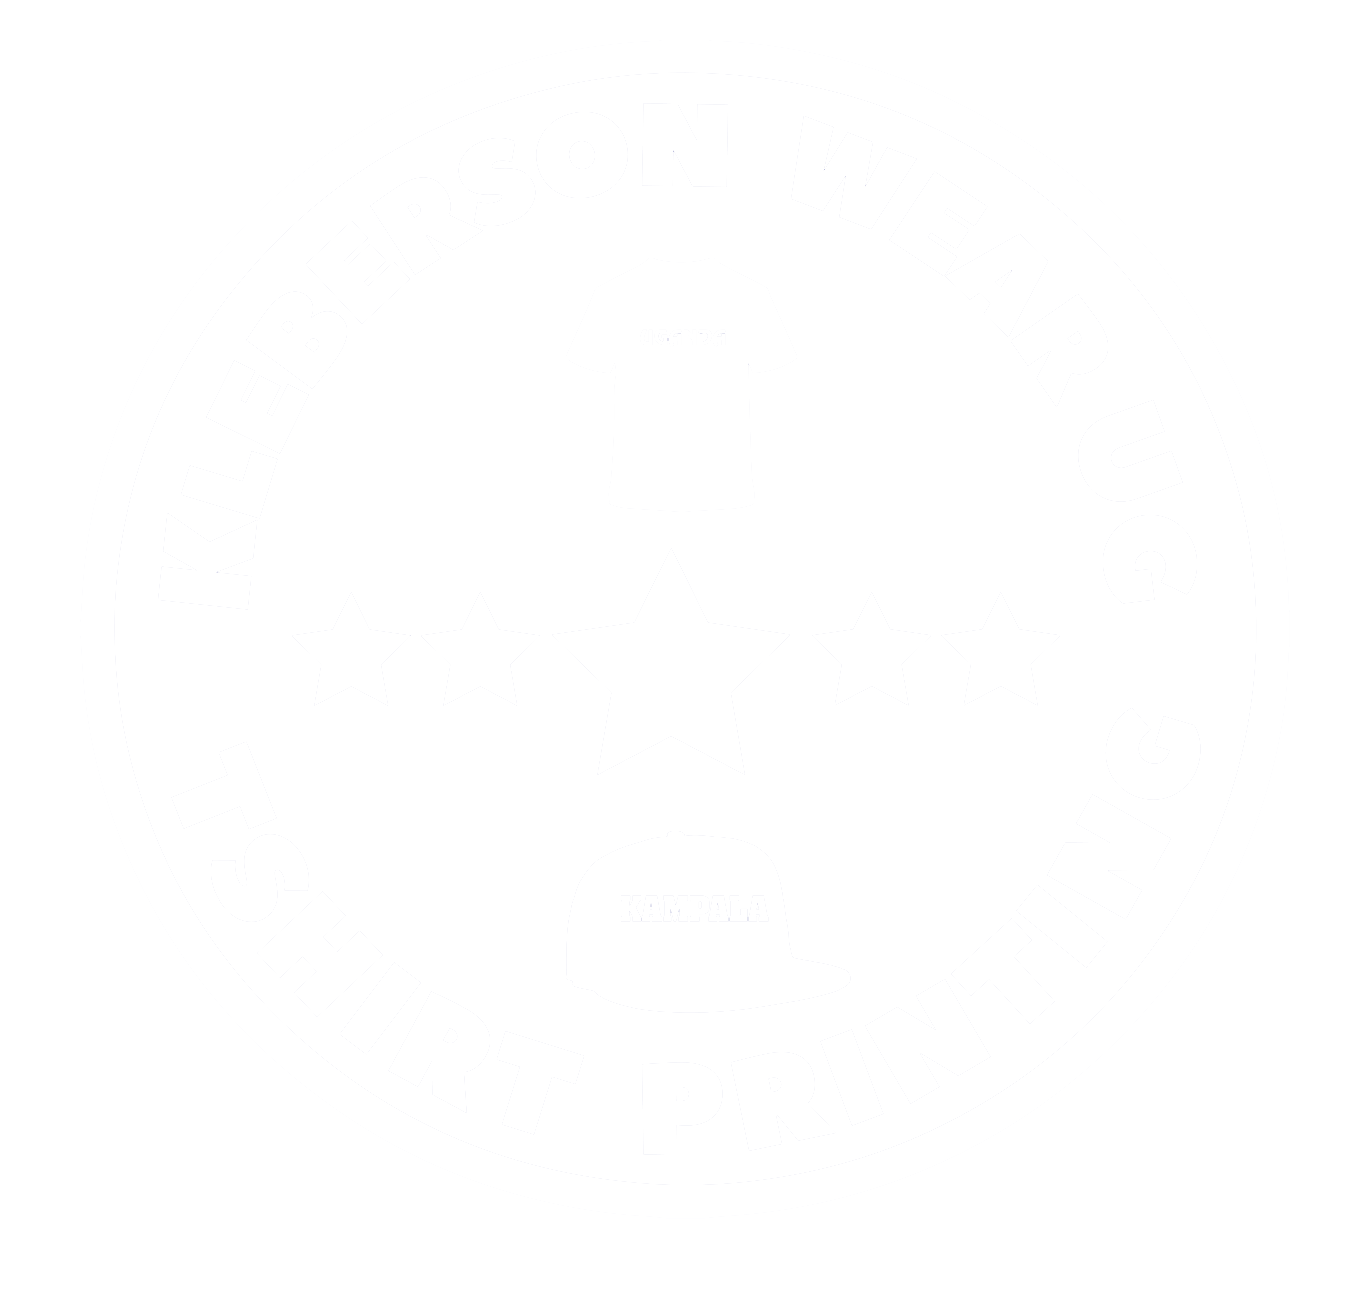 Kleberson wear ug  Tshirt Printing